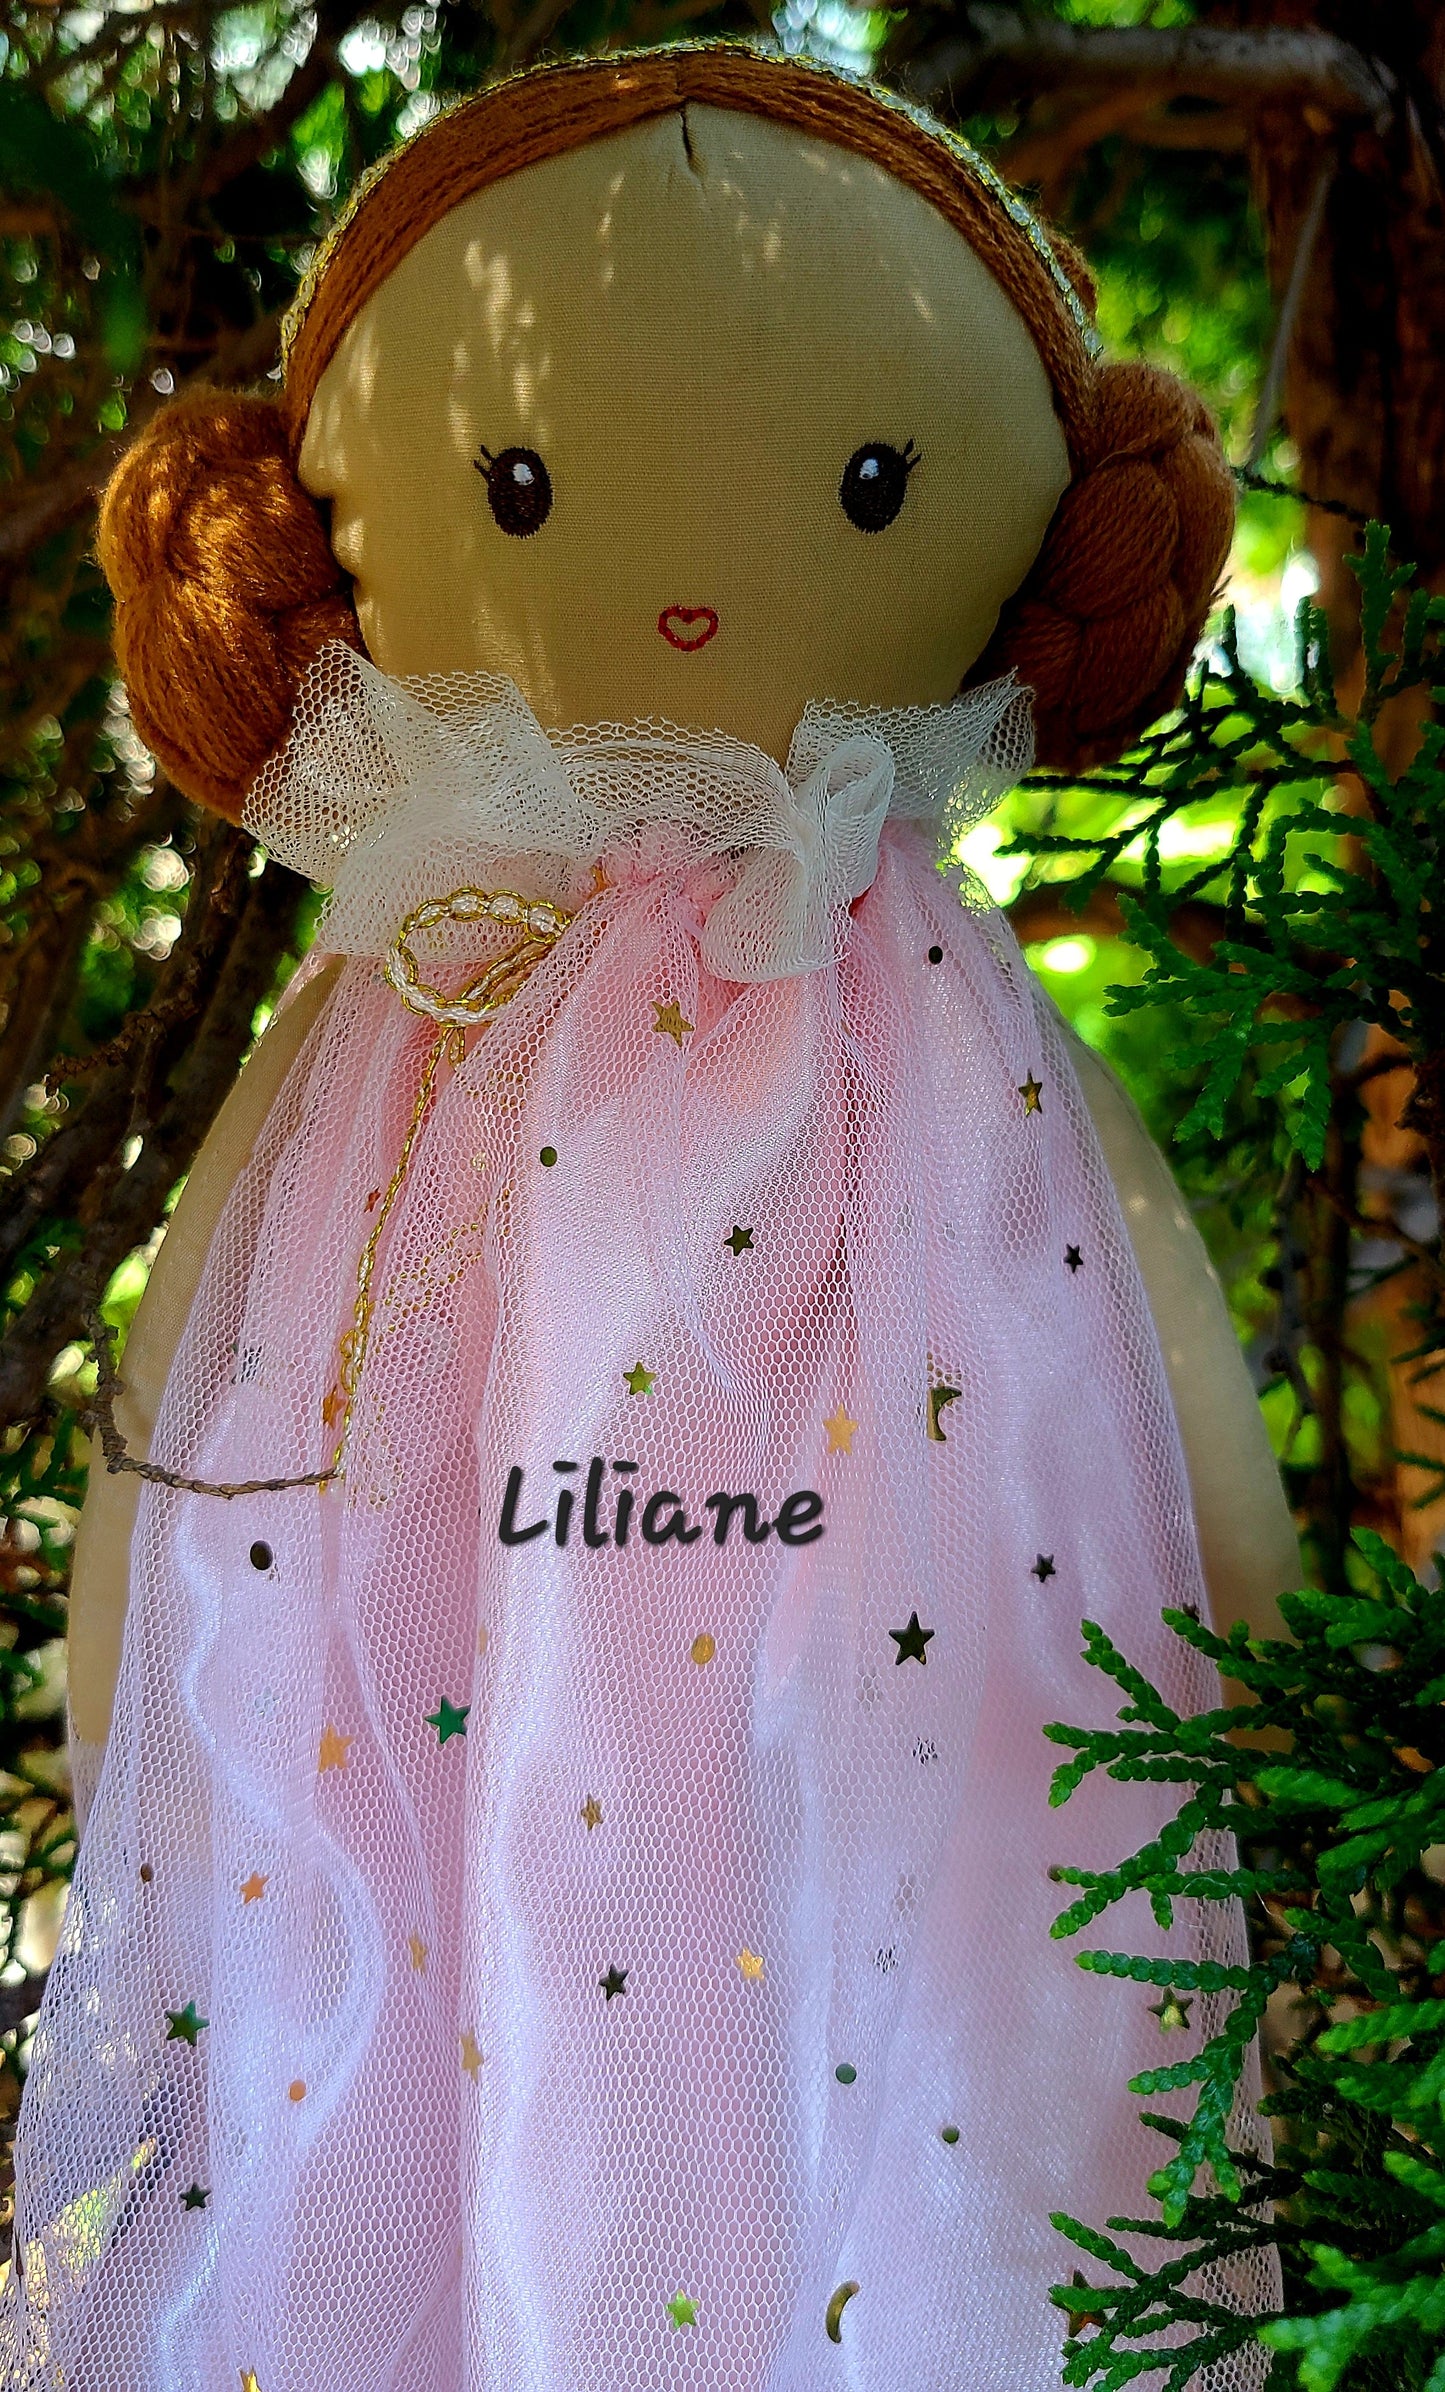 Personalized Soft Rag 13in Tan Skin Baby Girl Ballerina Dressing Dolls Plush Toy/ Decorative Plush Doll/ Handmade Baby Gift Toy